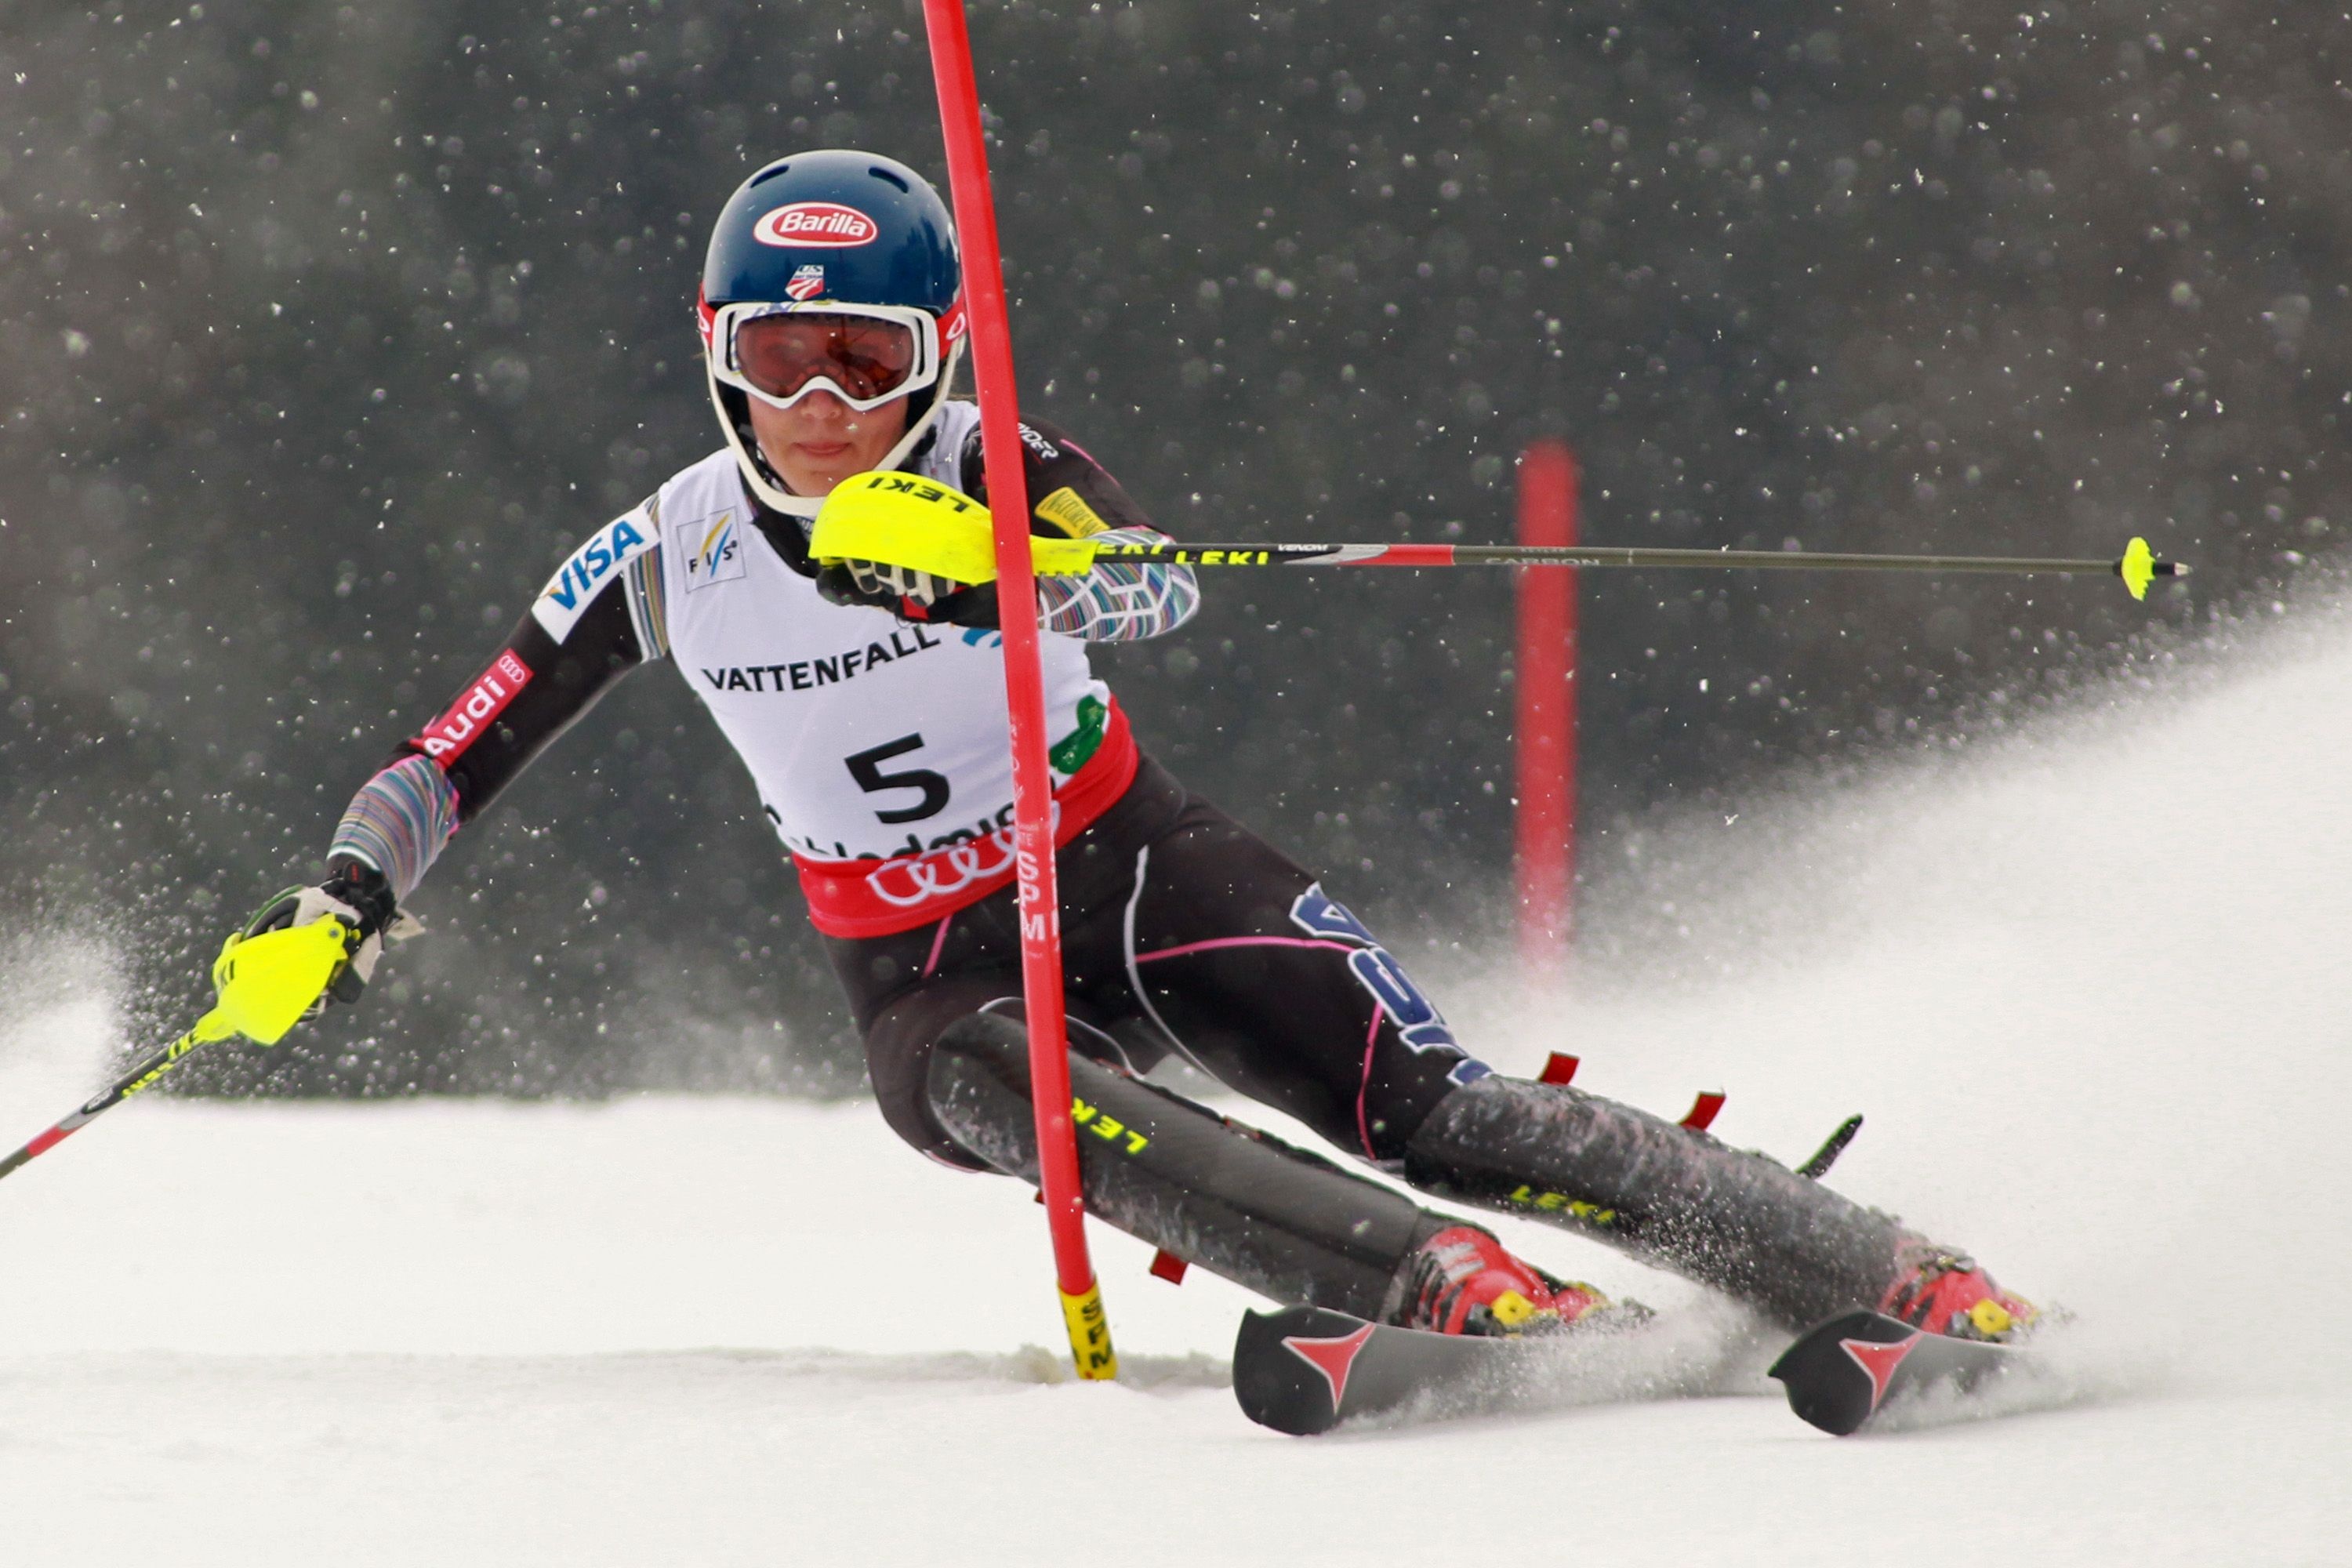 Slalom: Ski Racing, Discipline involving downhill between poles or gates, Extreme sports. 3000x2000 HD Wallpaper.